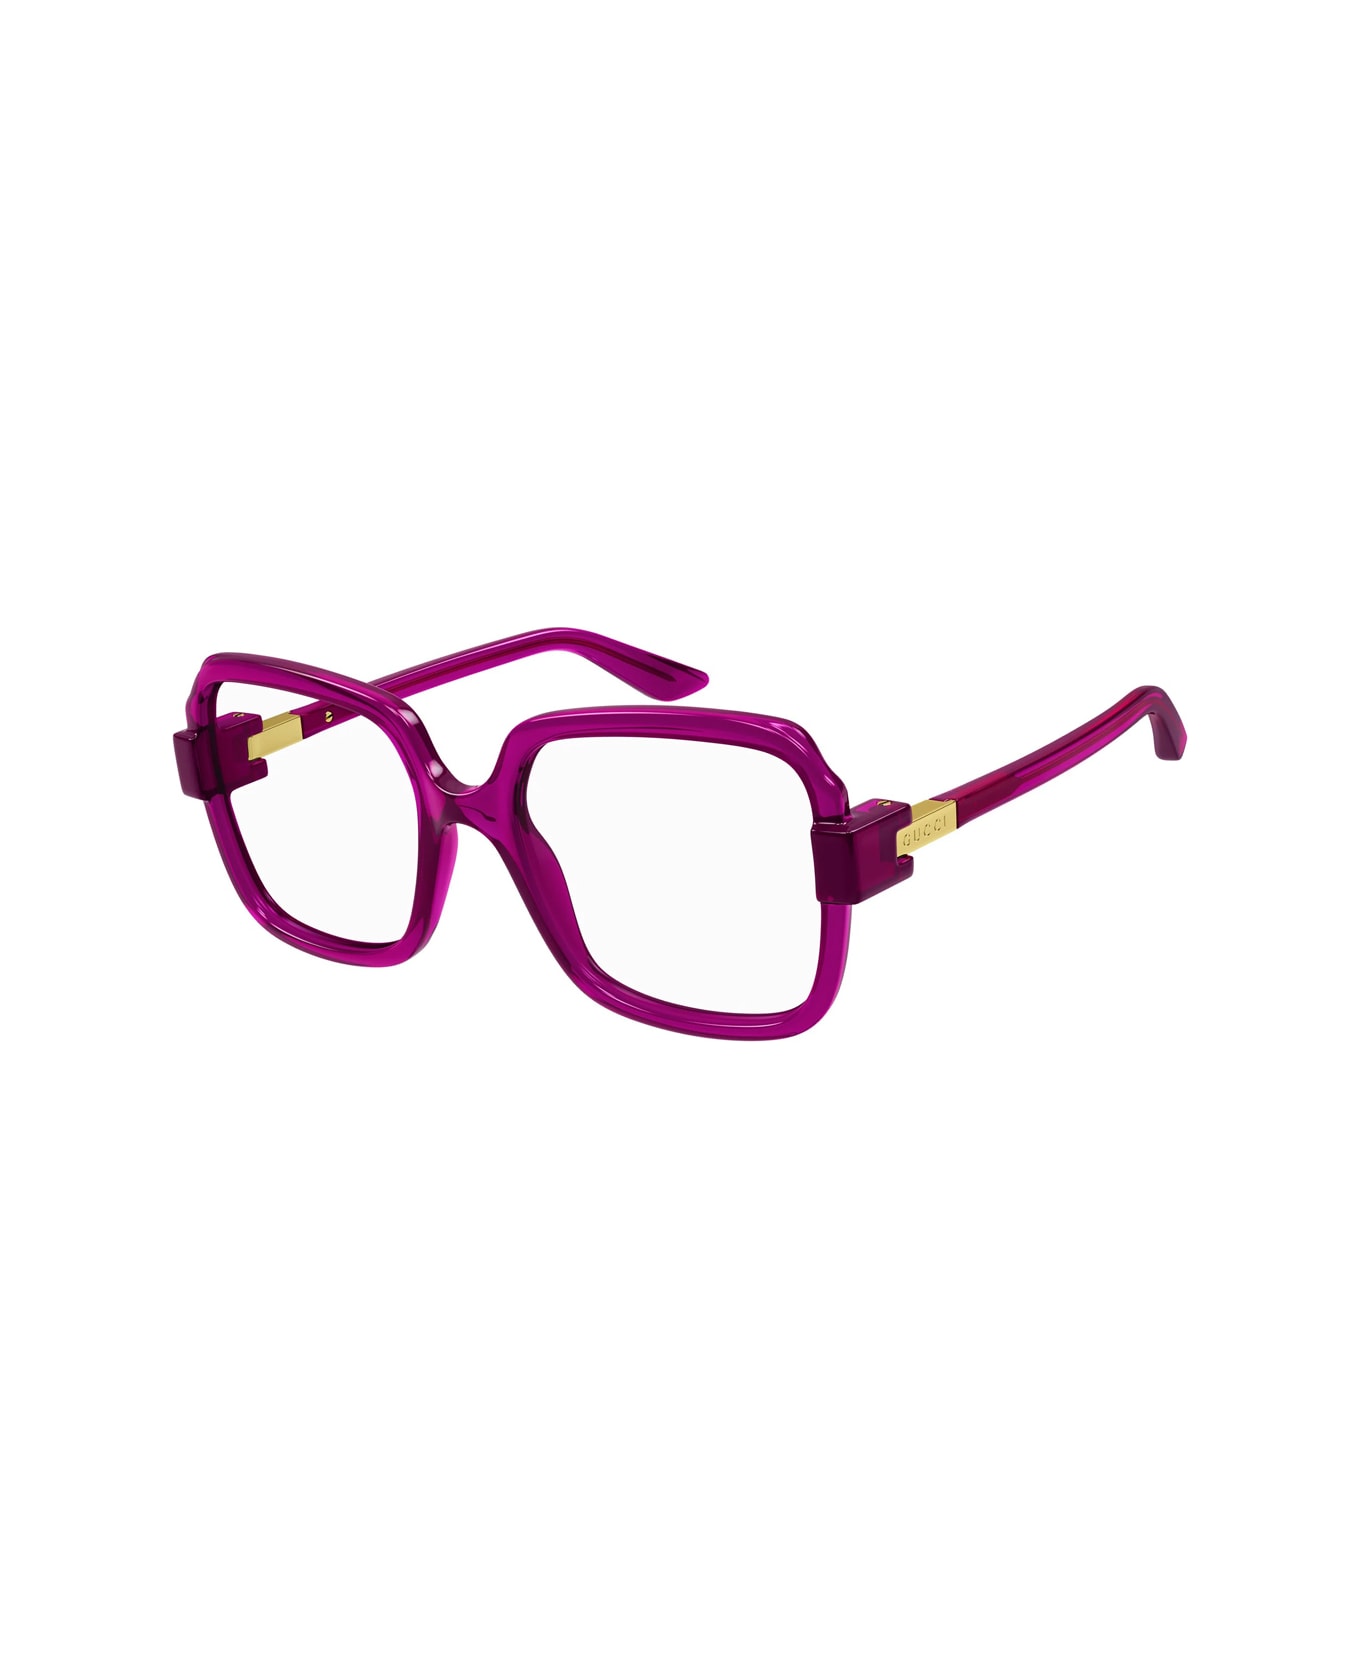 Gucci Eyewear Gg1433o Linea Lettering 003 Glasses - Viola アイウェア